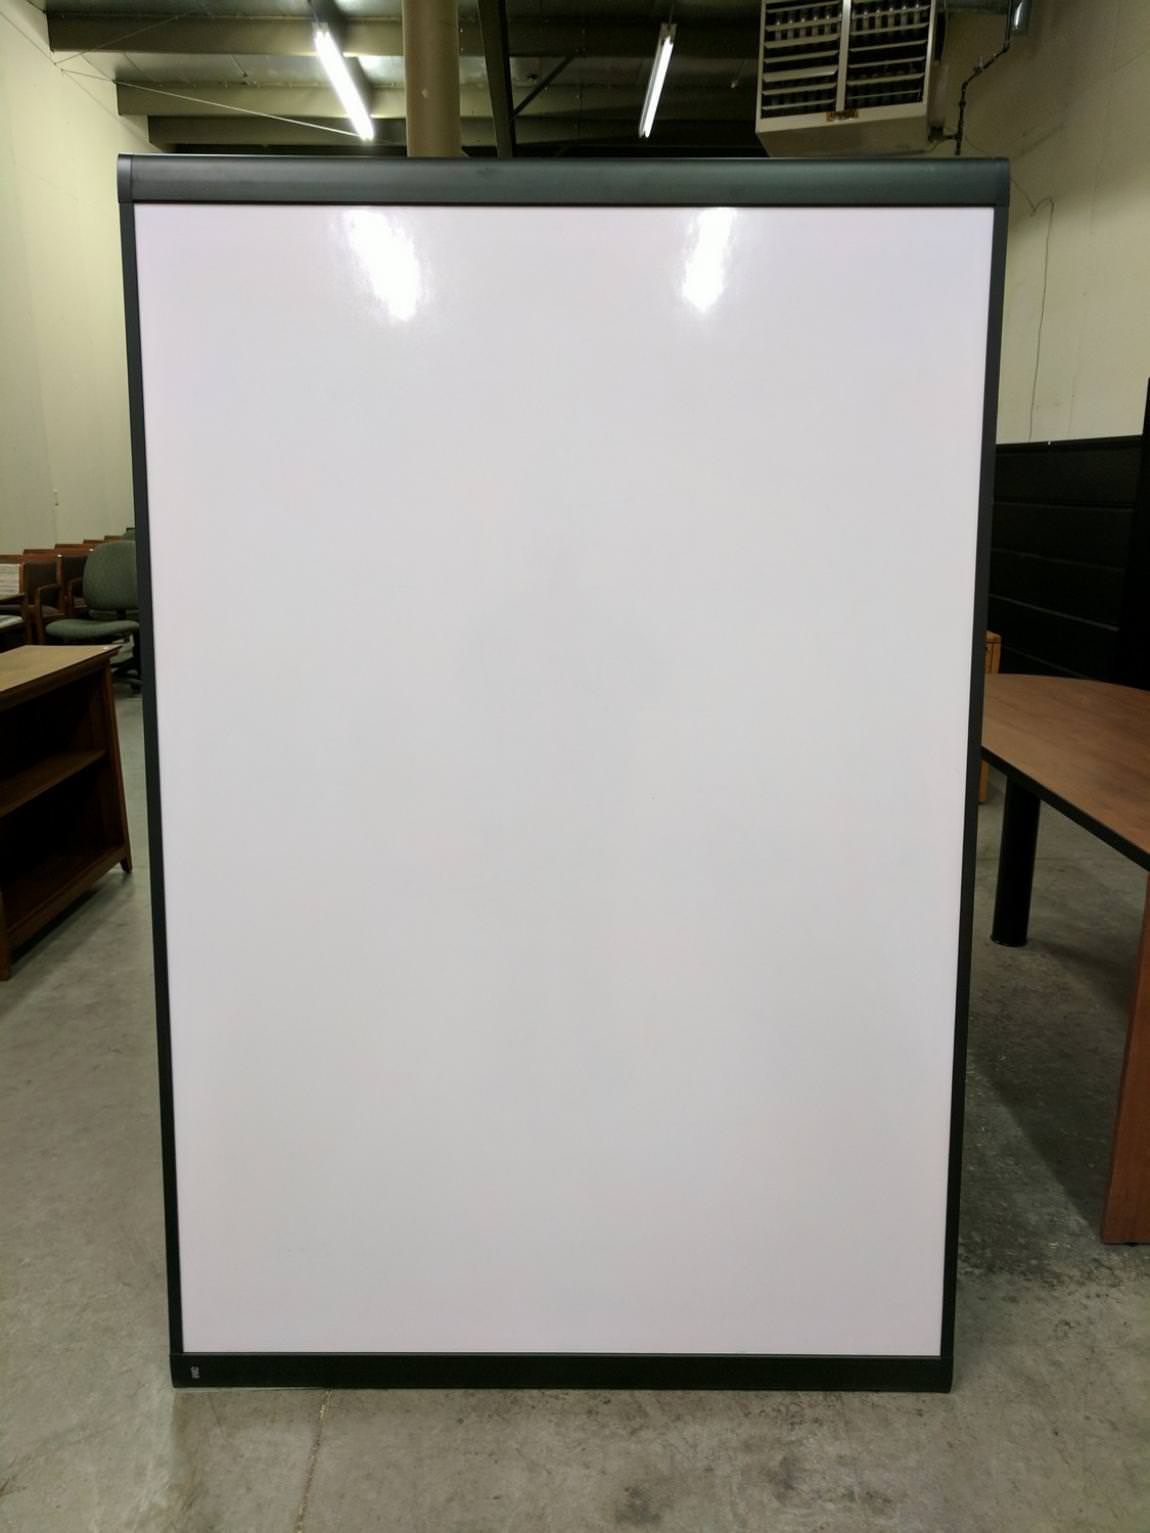 72x48 3M Dry Erase Whiteboard with Black Plastic Frame